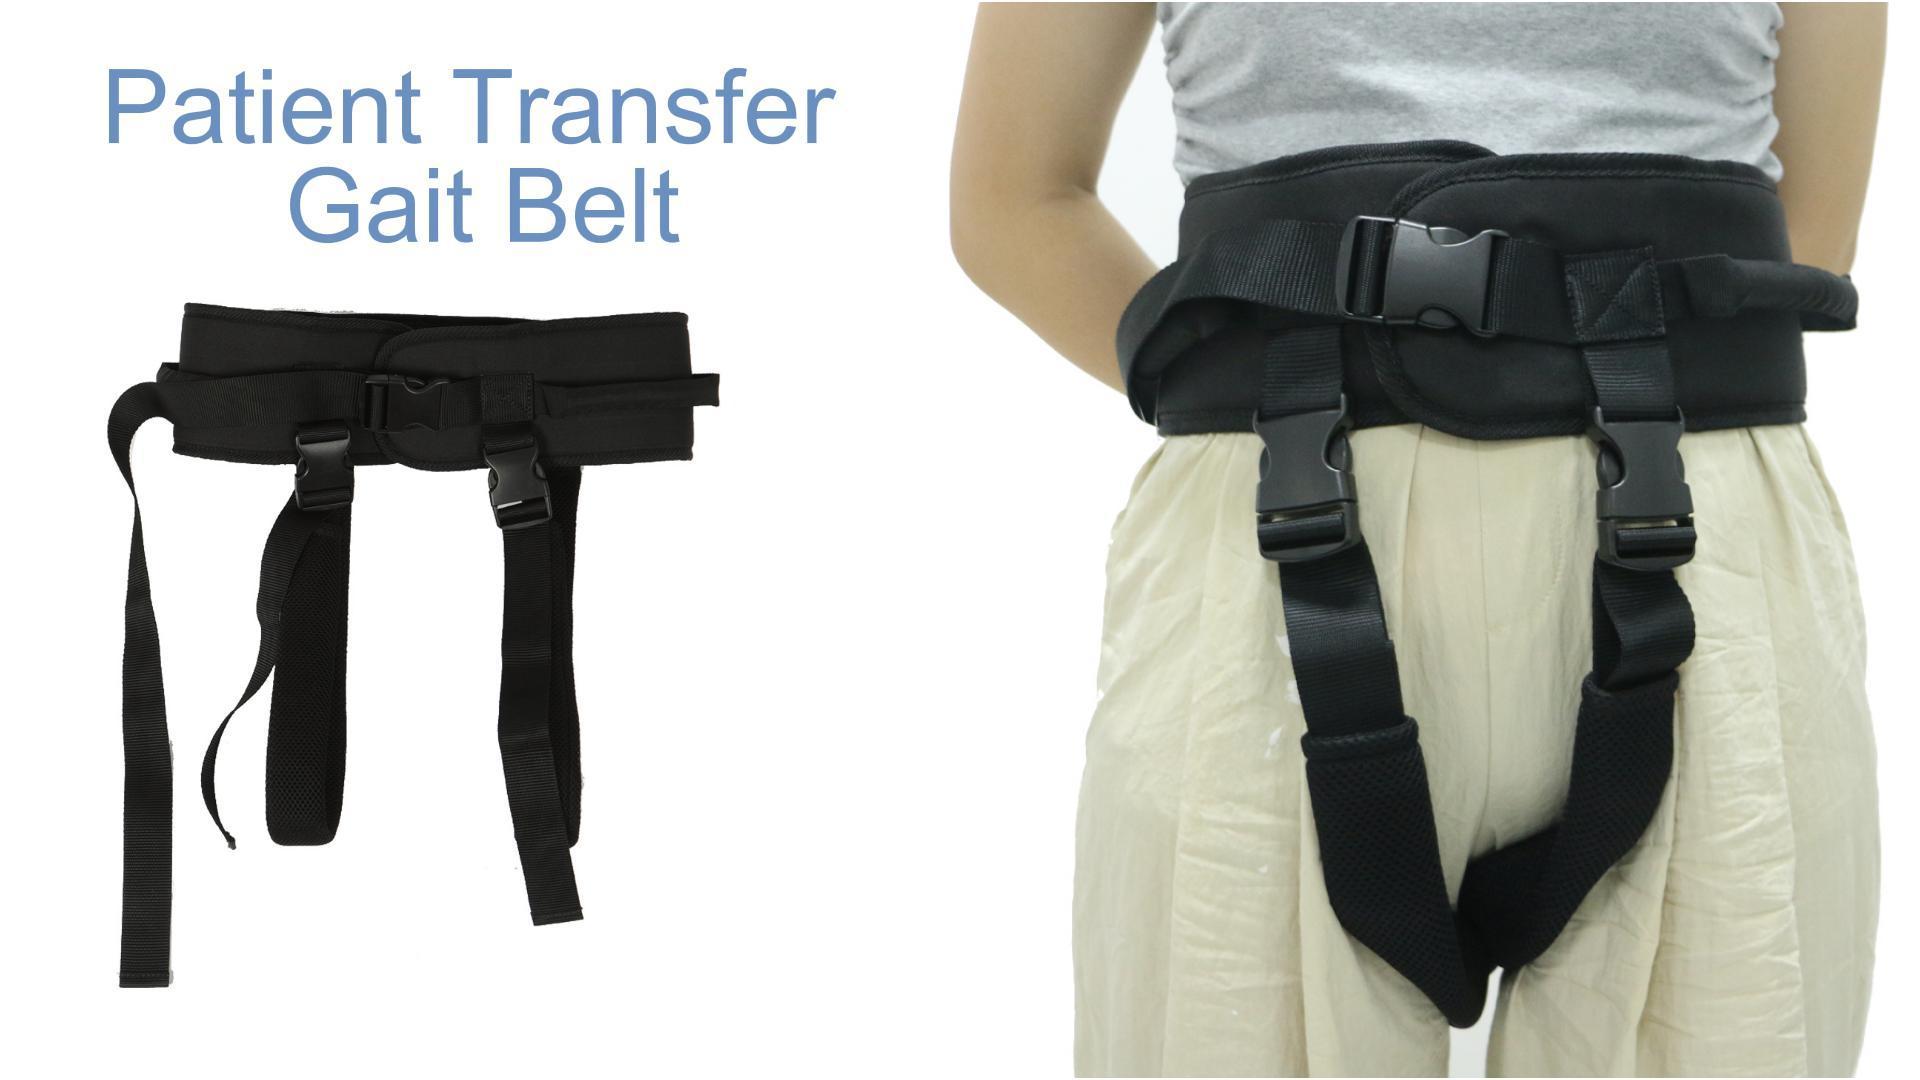 Patient transfer belt with leg straps